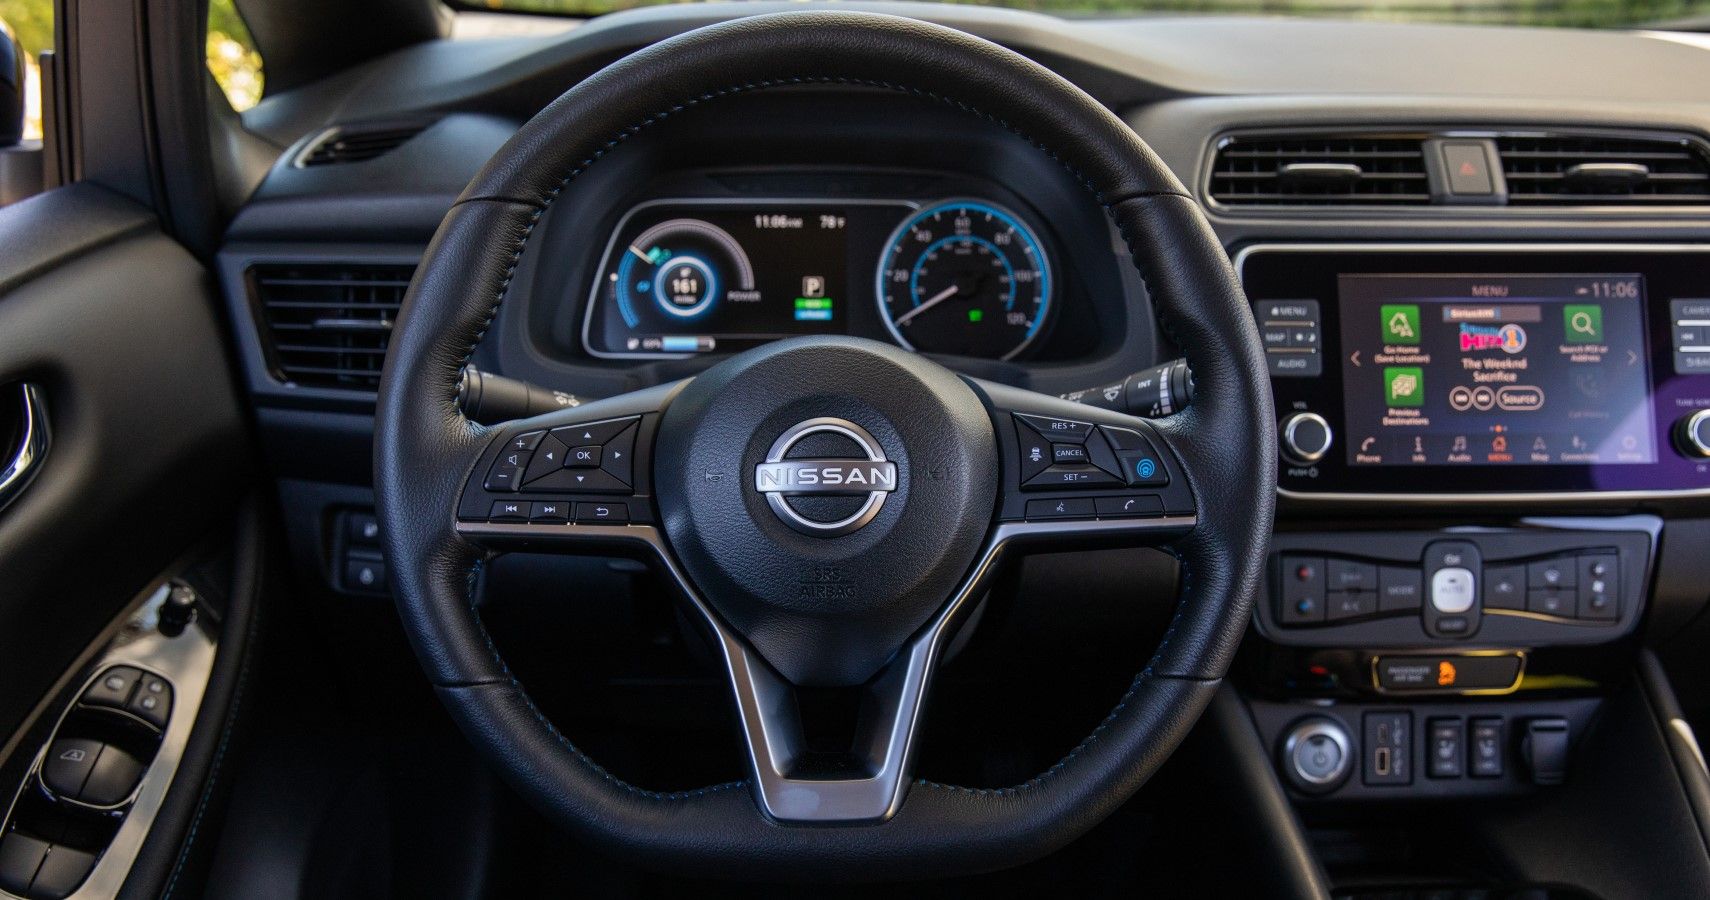 2023 Nissan LEAF cockpit view